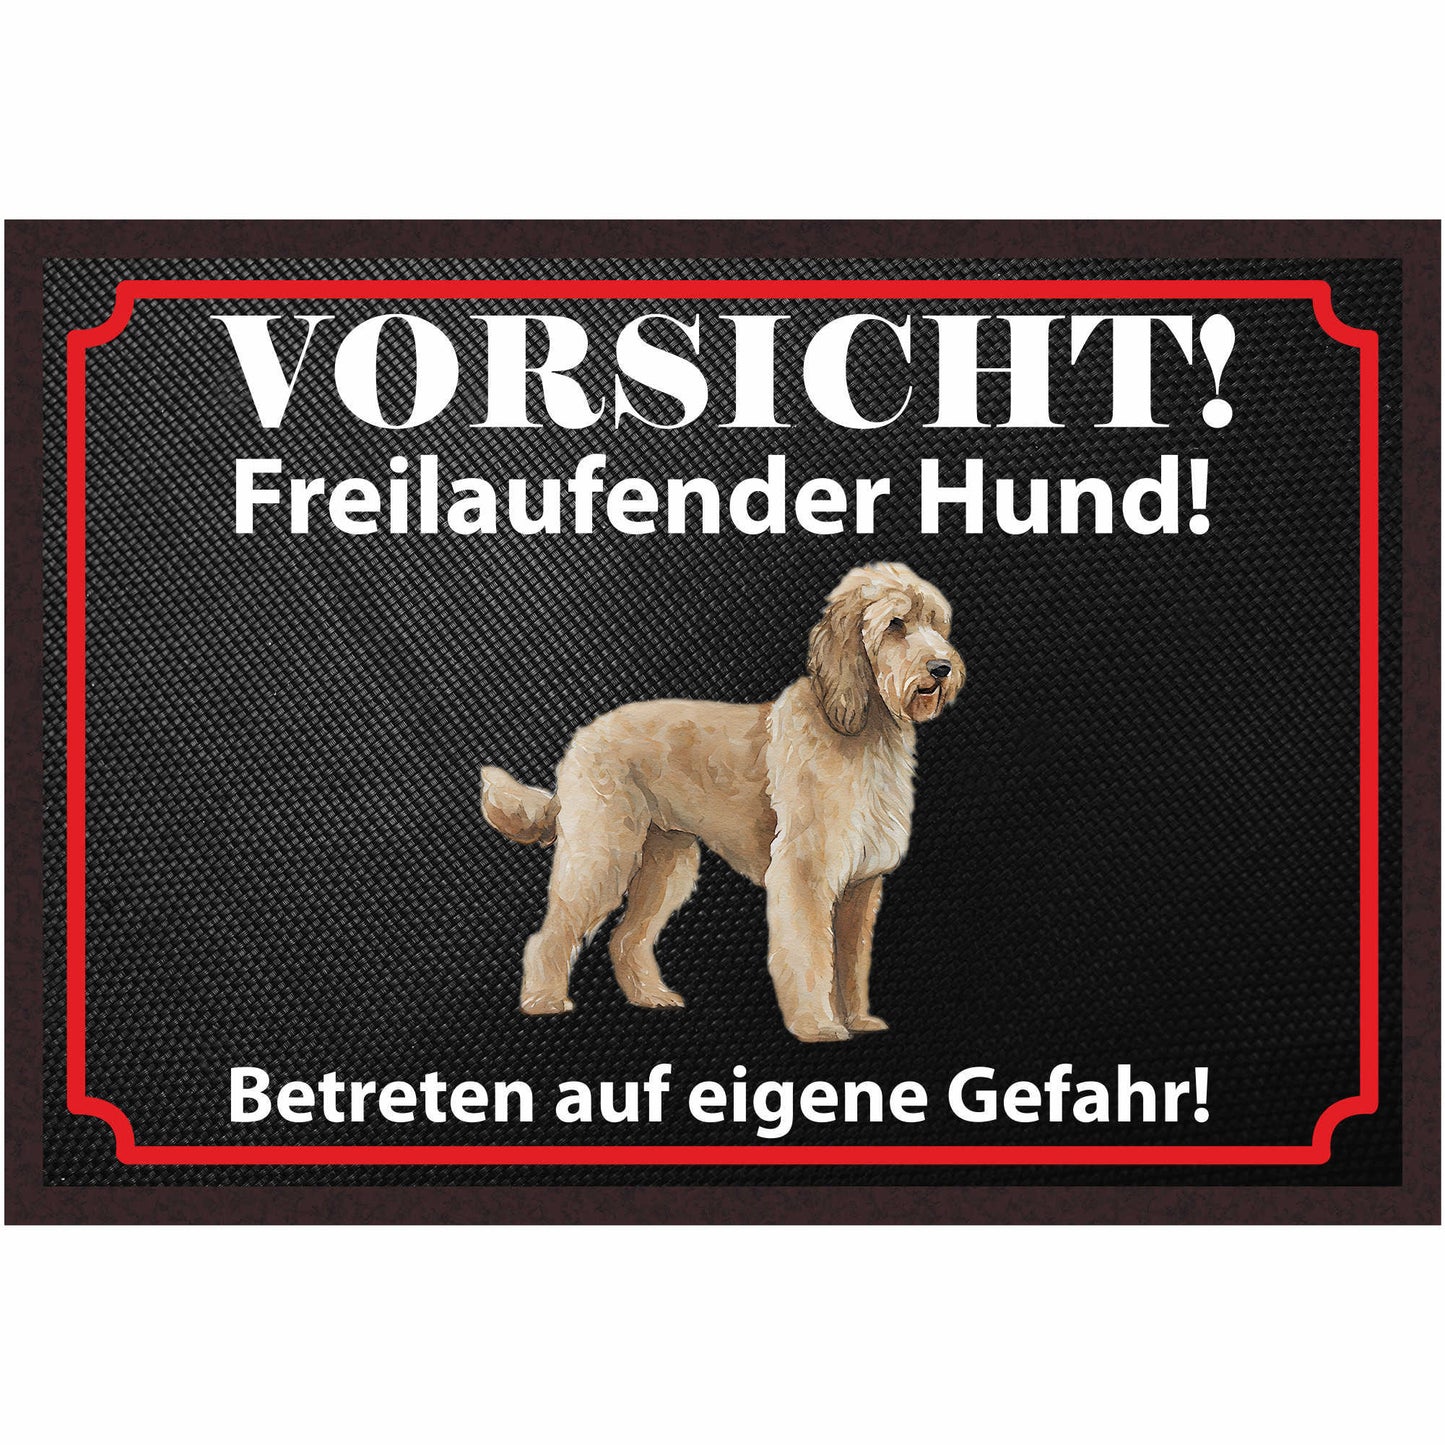 Fussmatte Hund - Goldendoodle - 50x35 cm mit lustigem Spruch